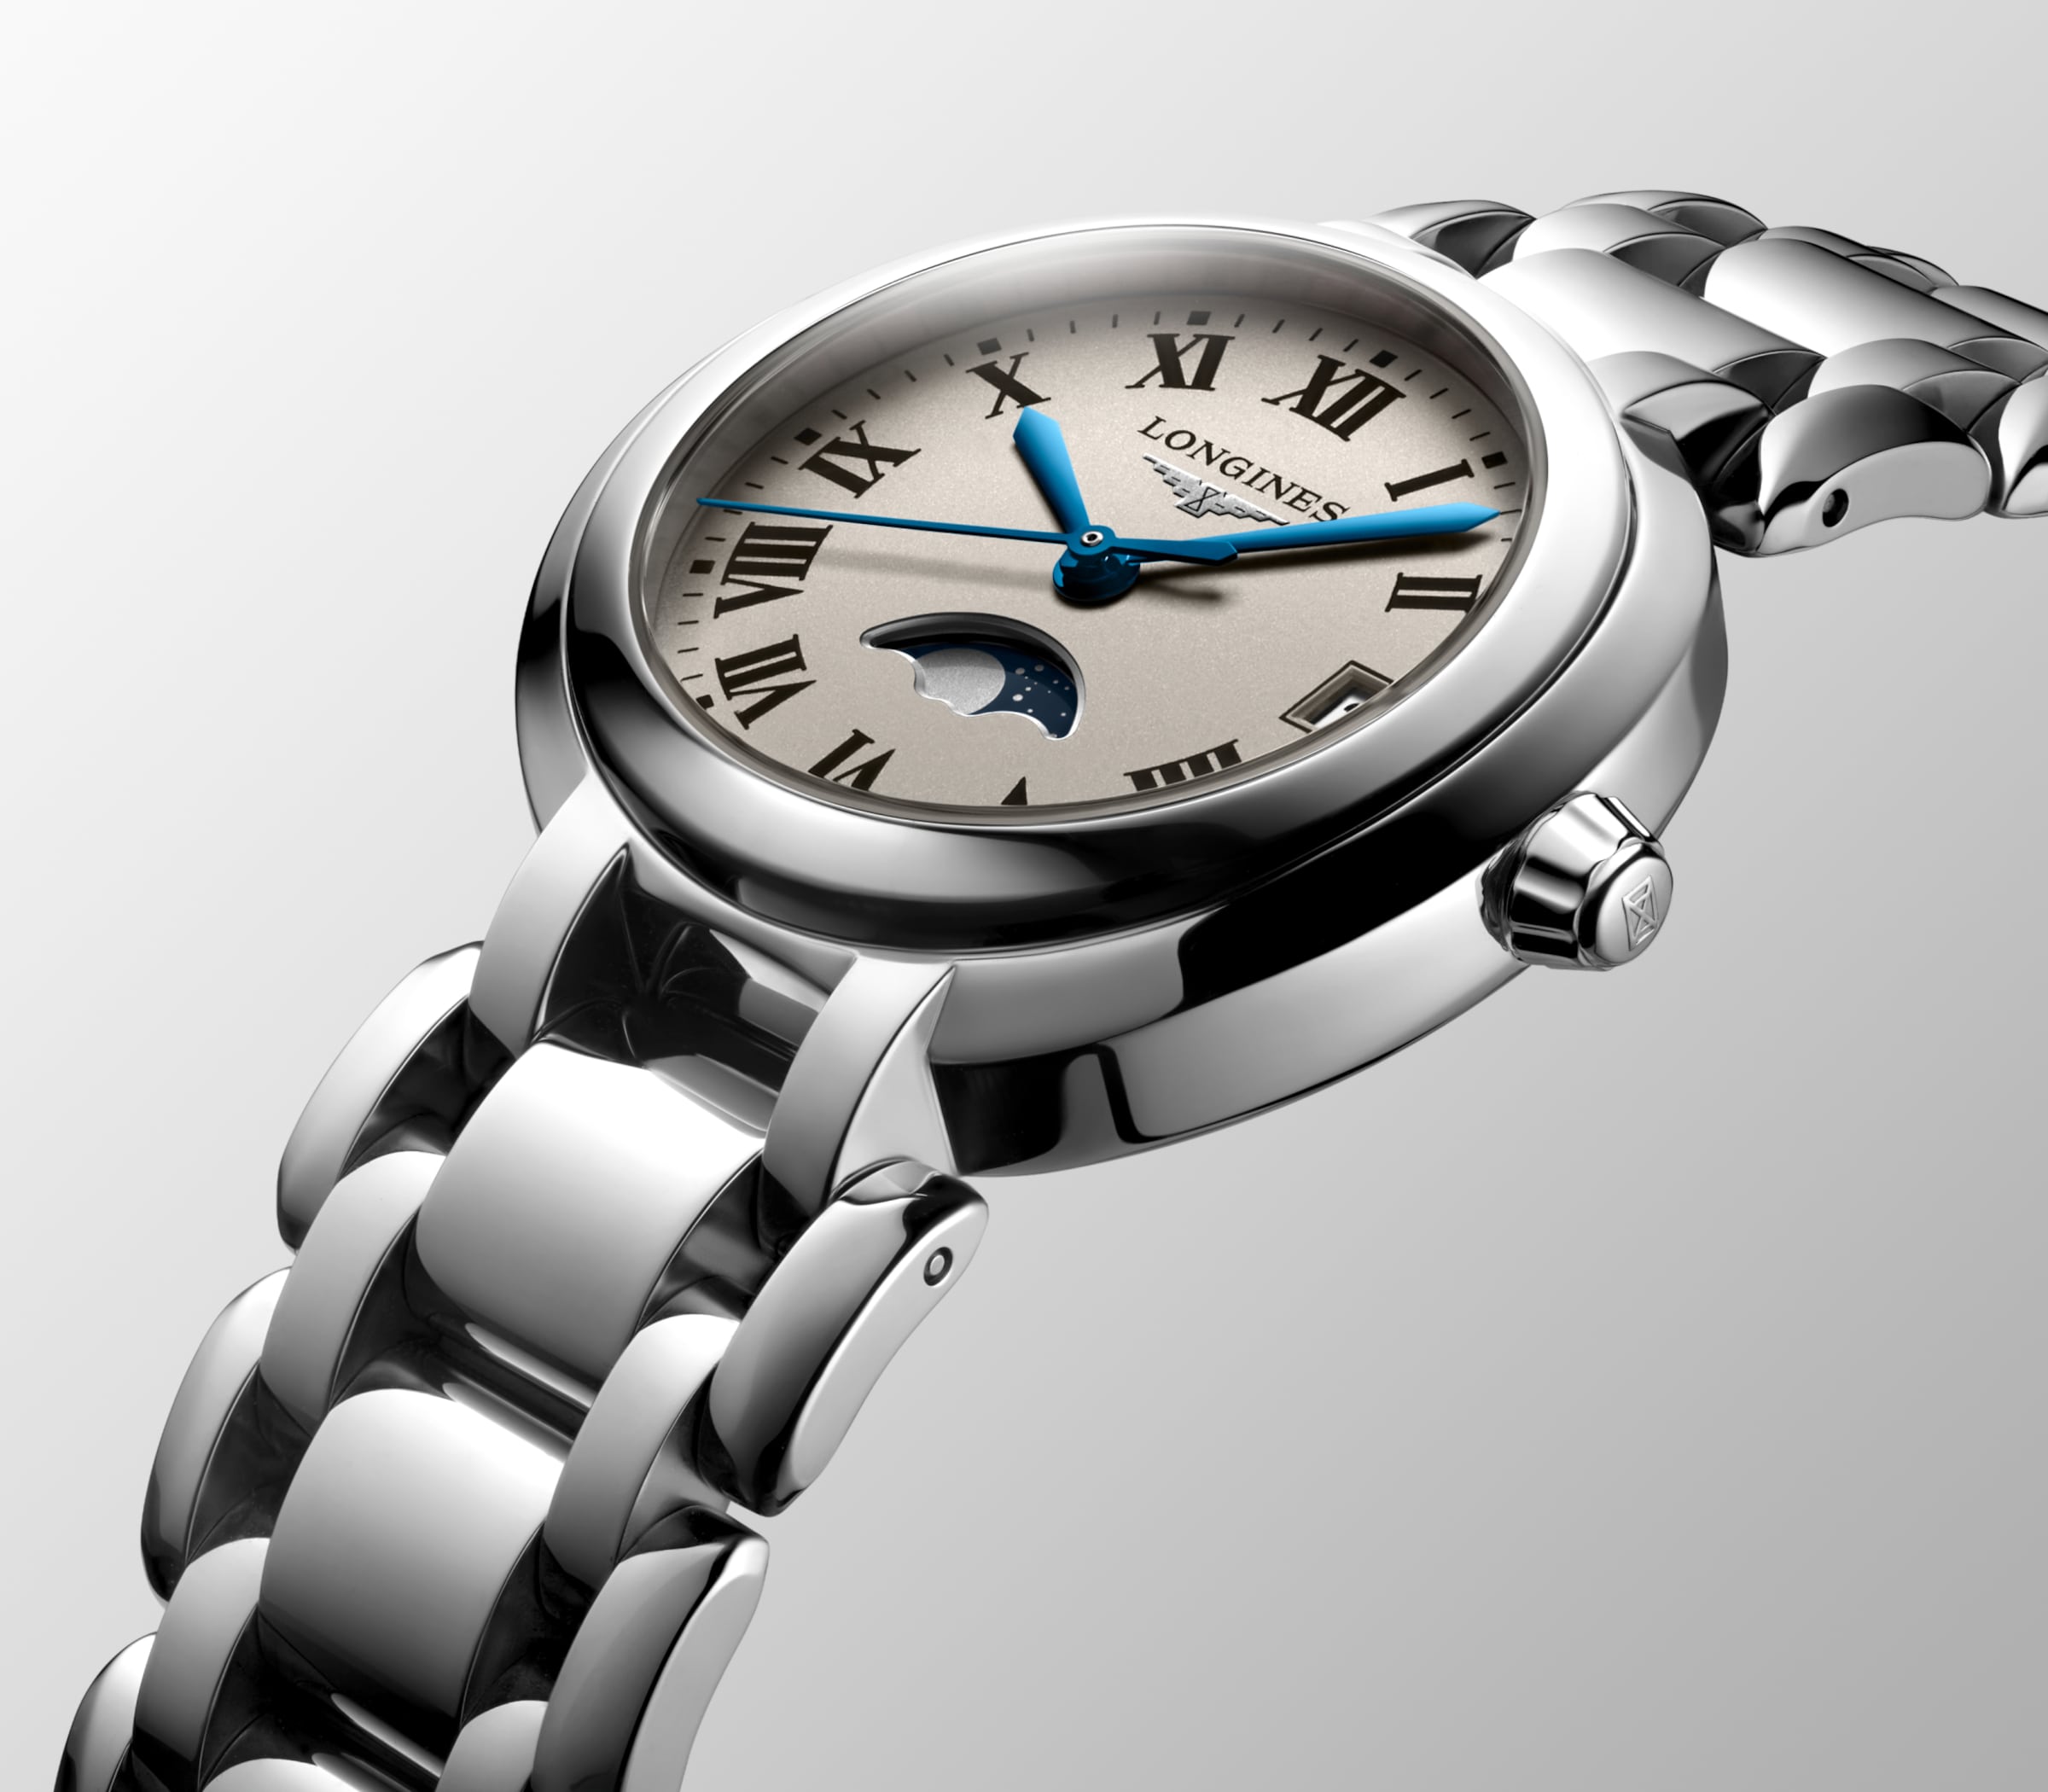 Longines PRIMALUNA Quartz Stainless steel Watch - L8.115.4.71.6